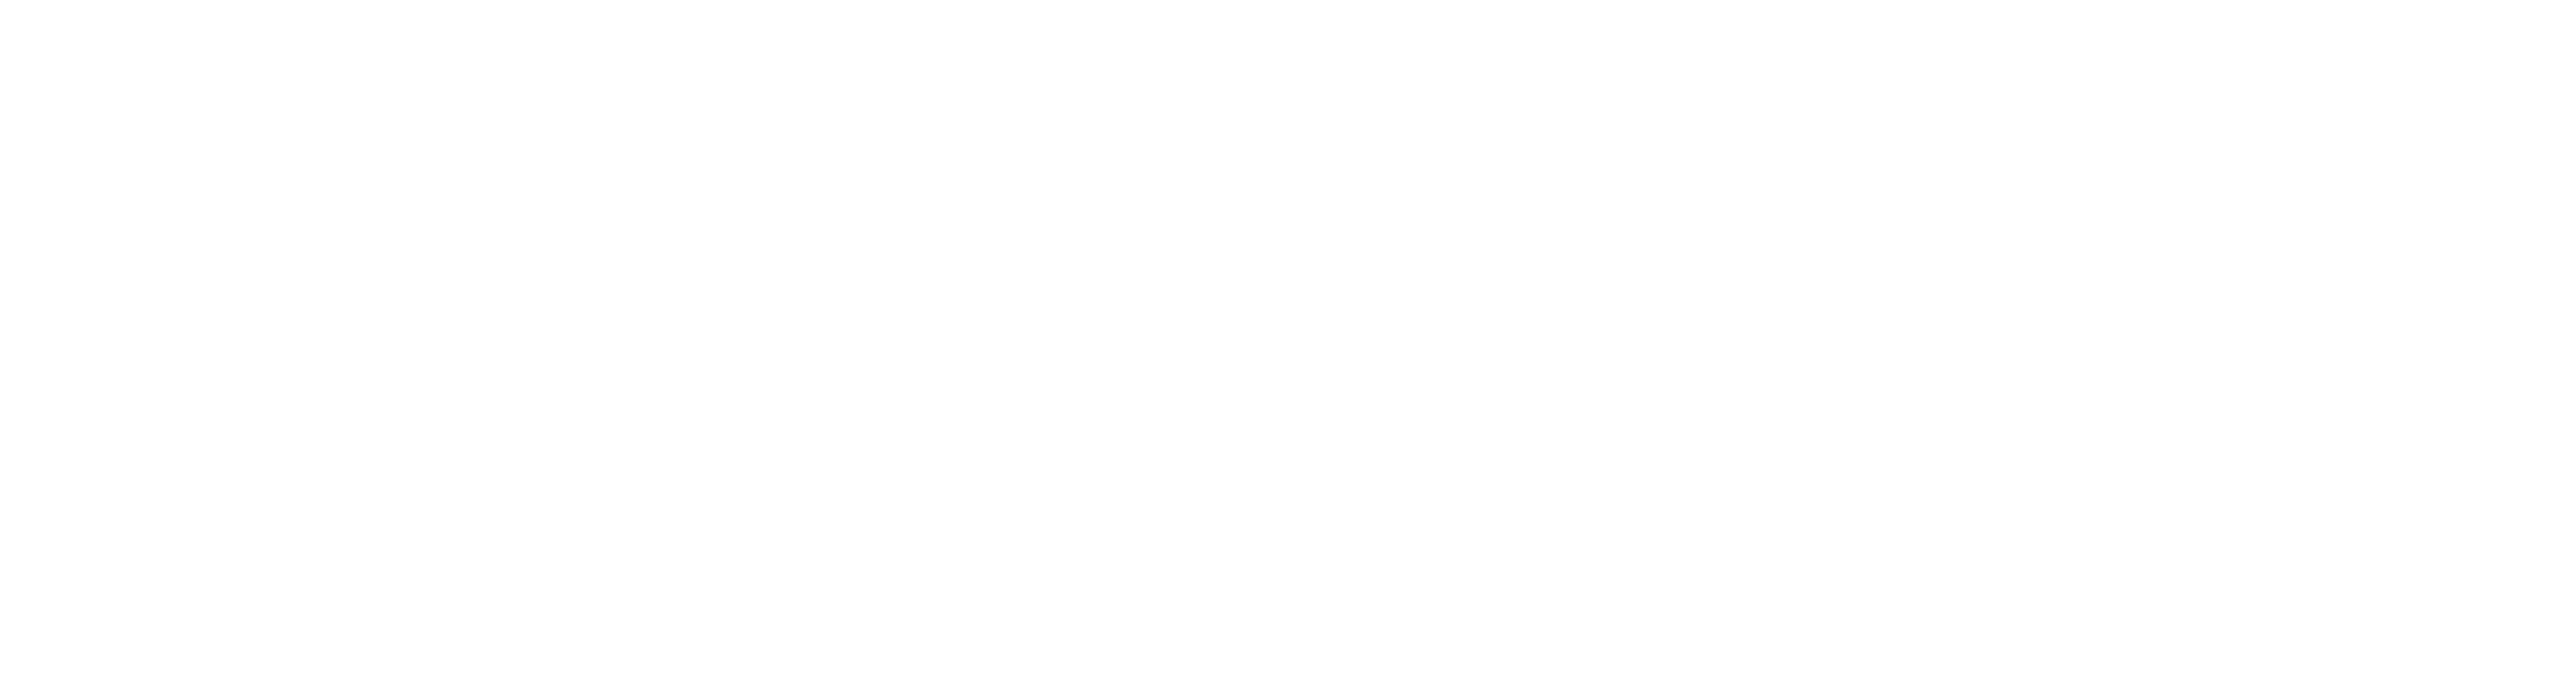 OPOdcast